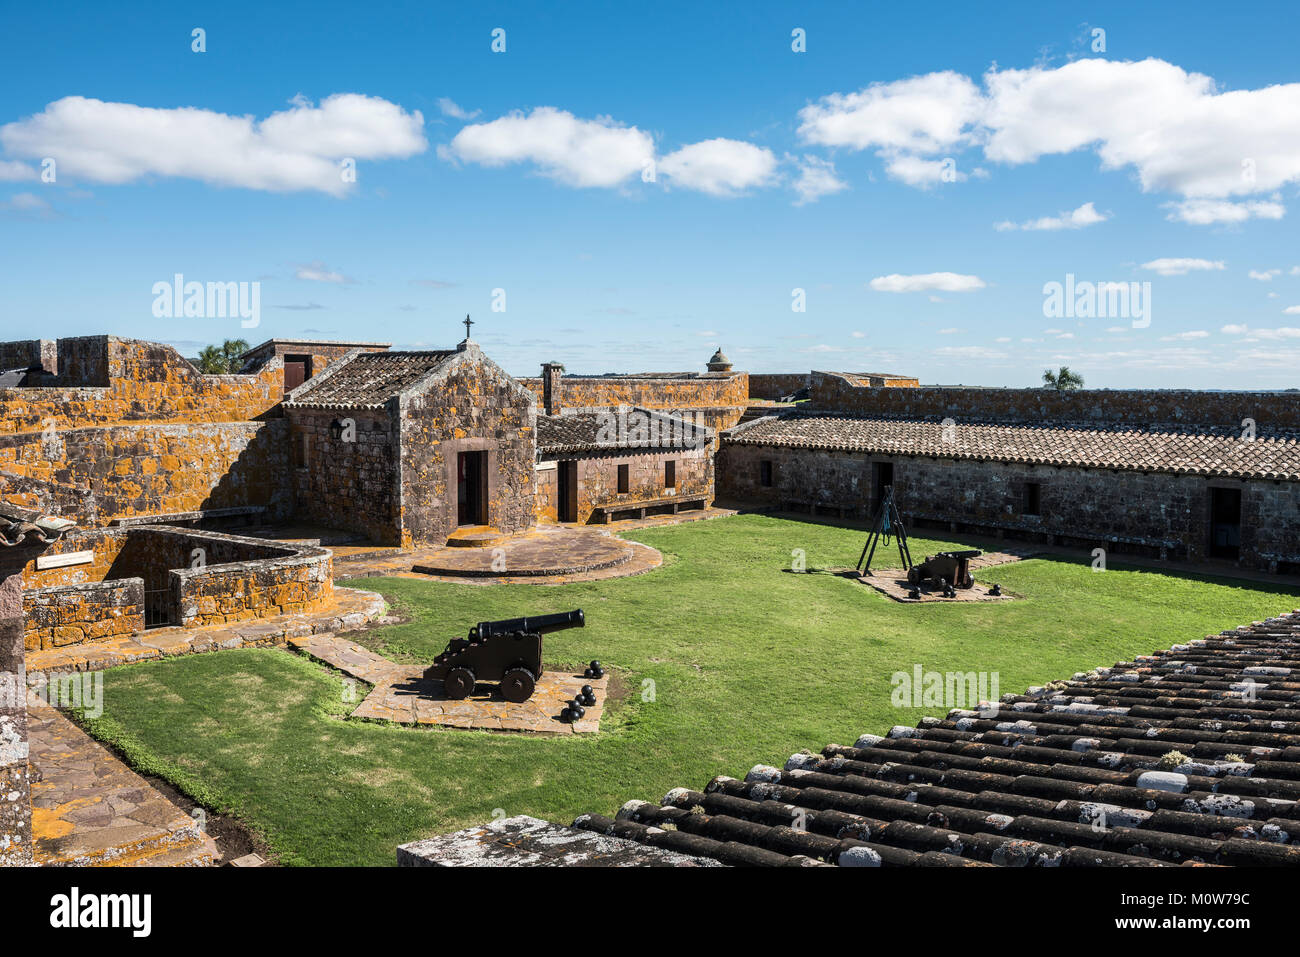 San Miguael fort in Rocha Provinz, in der Nähe der brasilianischen Grenze, Uruguay Stockfoto